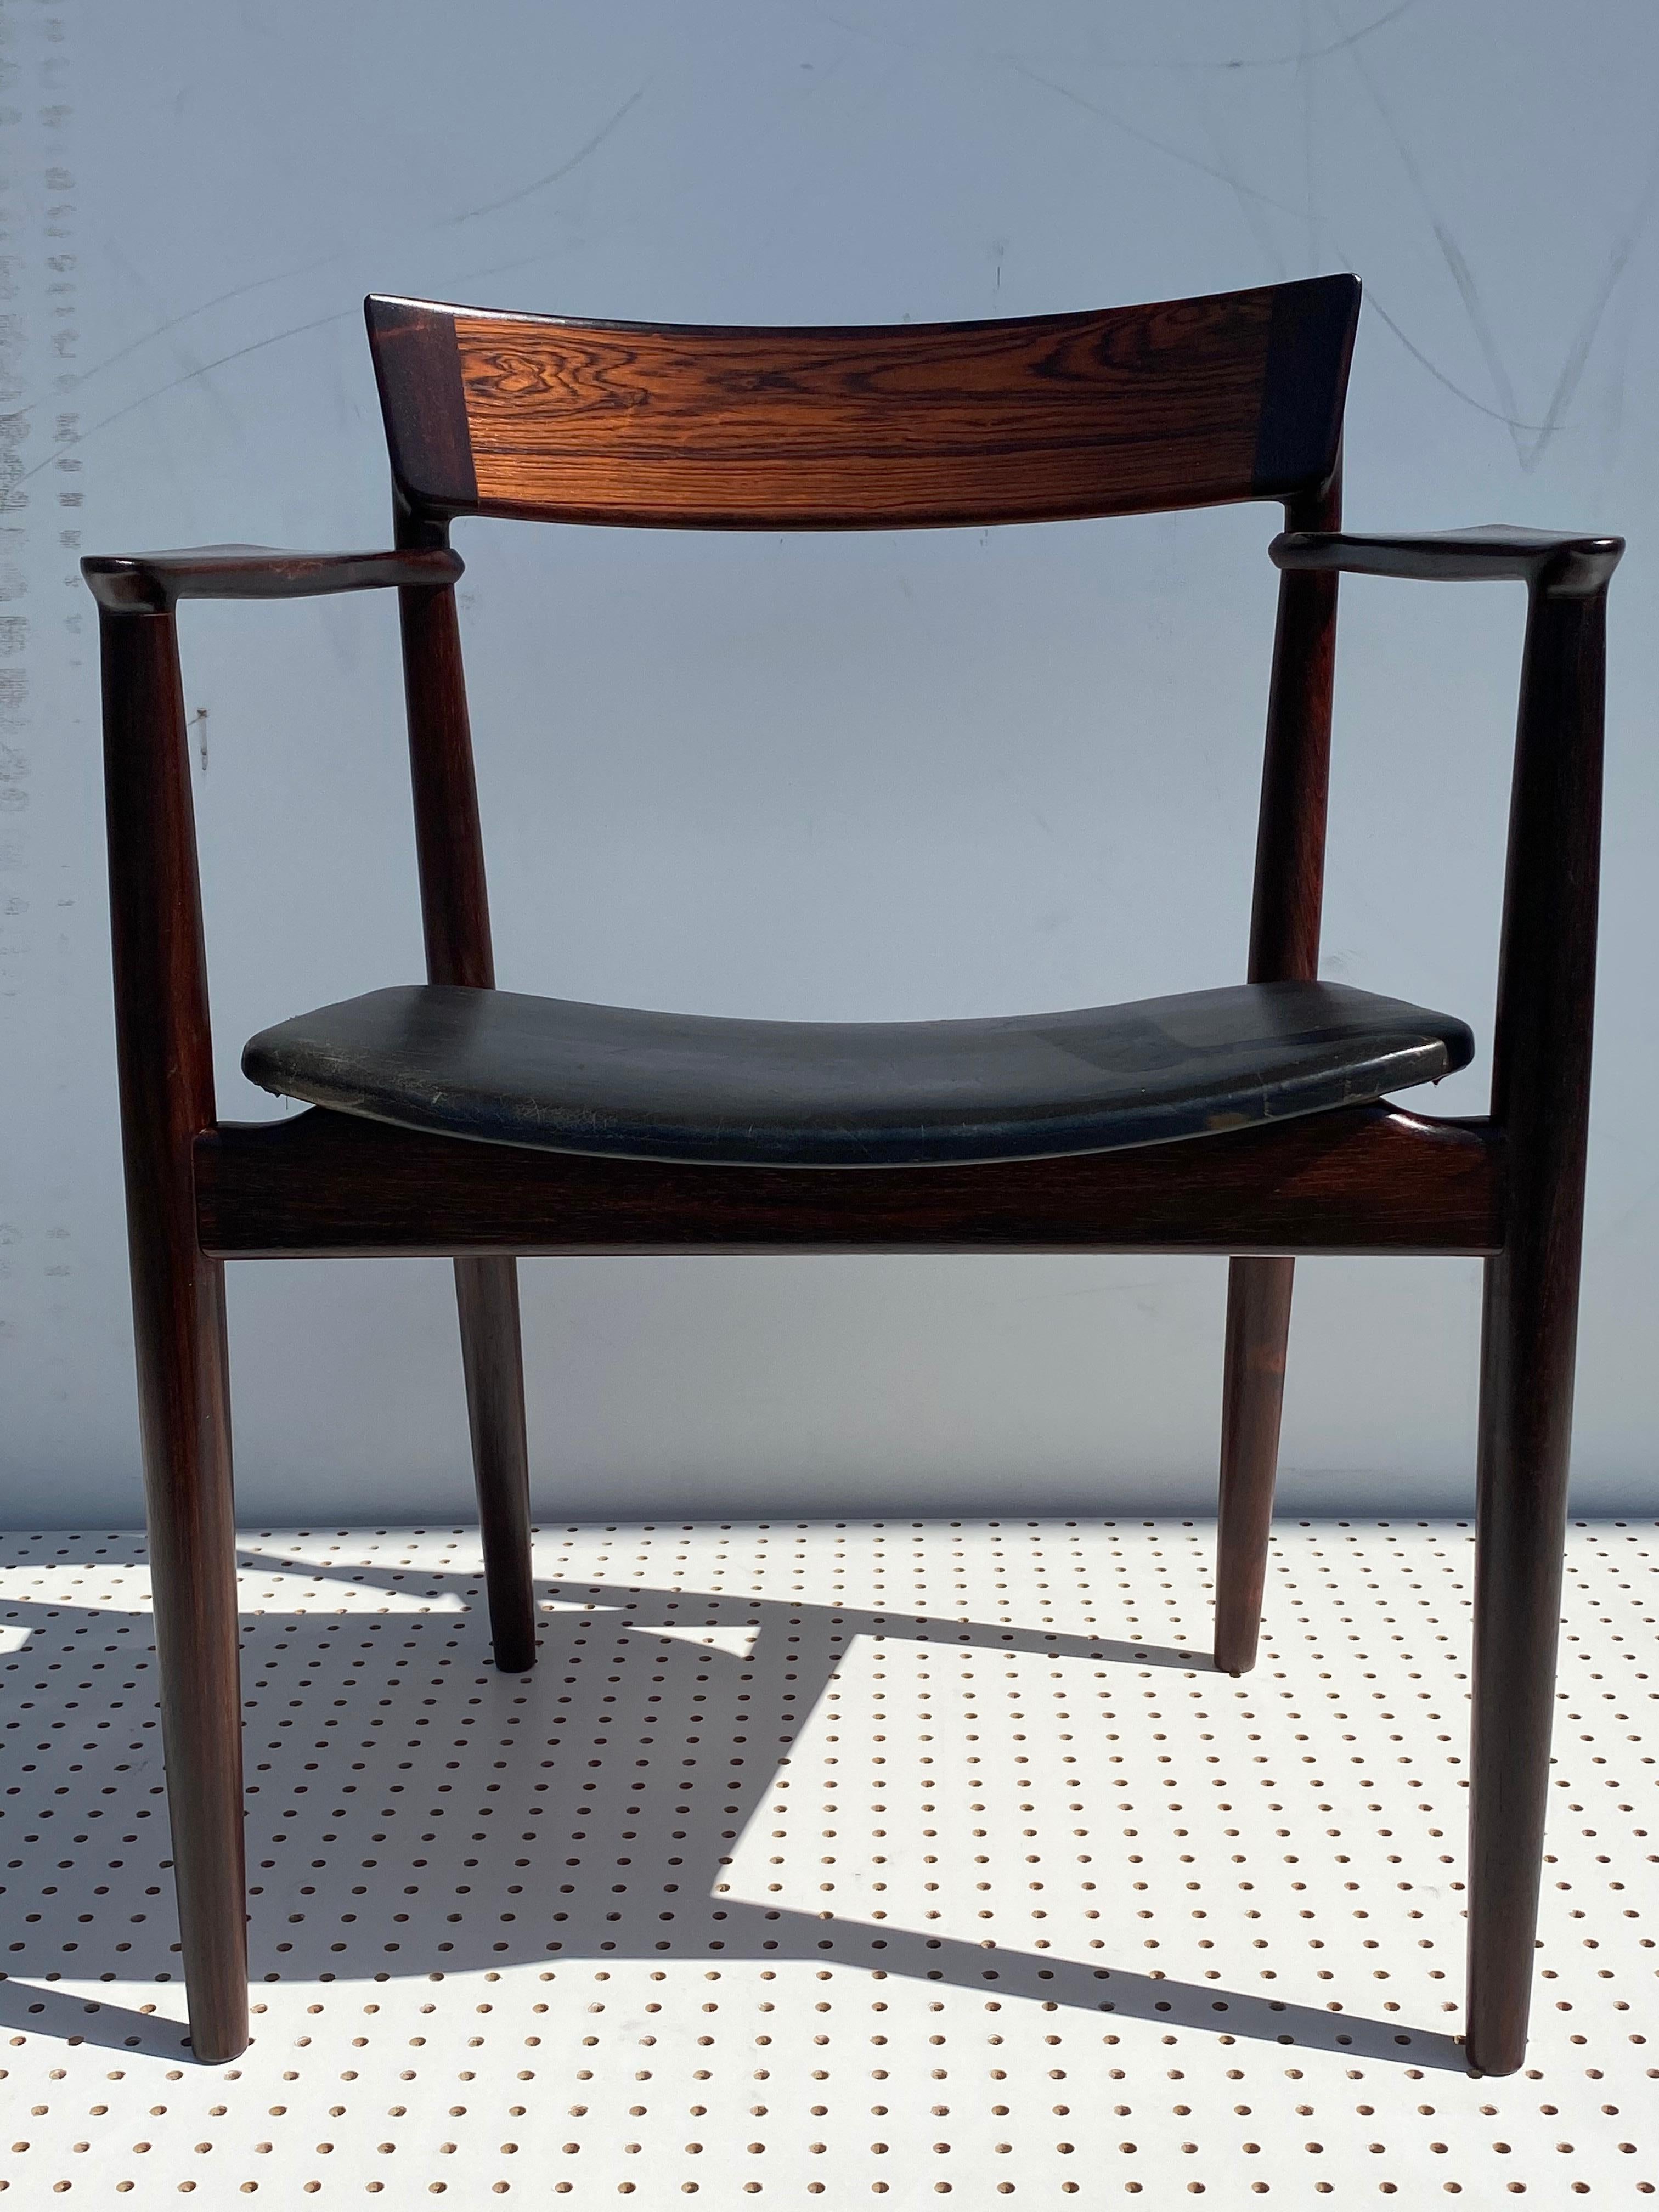 Rosewood desk / armchair in original black leather in the style of Niels Vodder.
Measures: Seat is 16.5